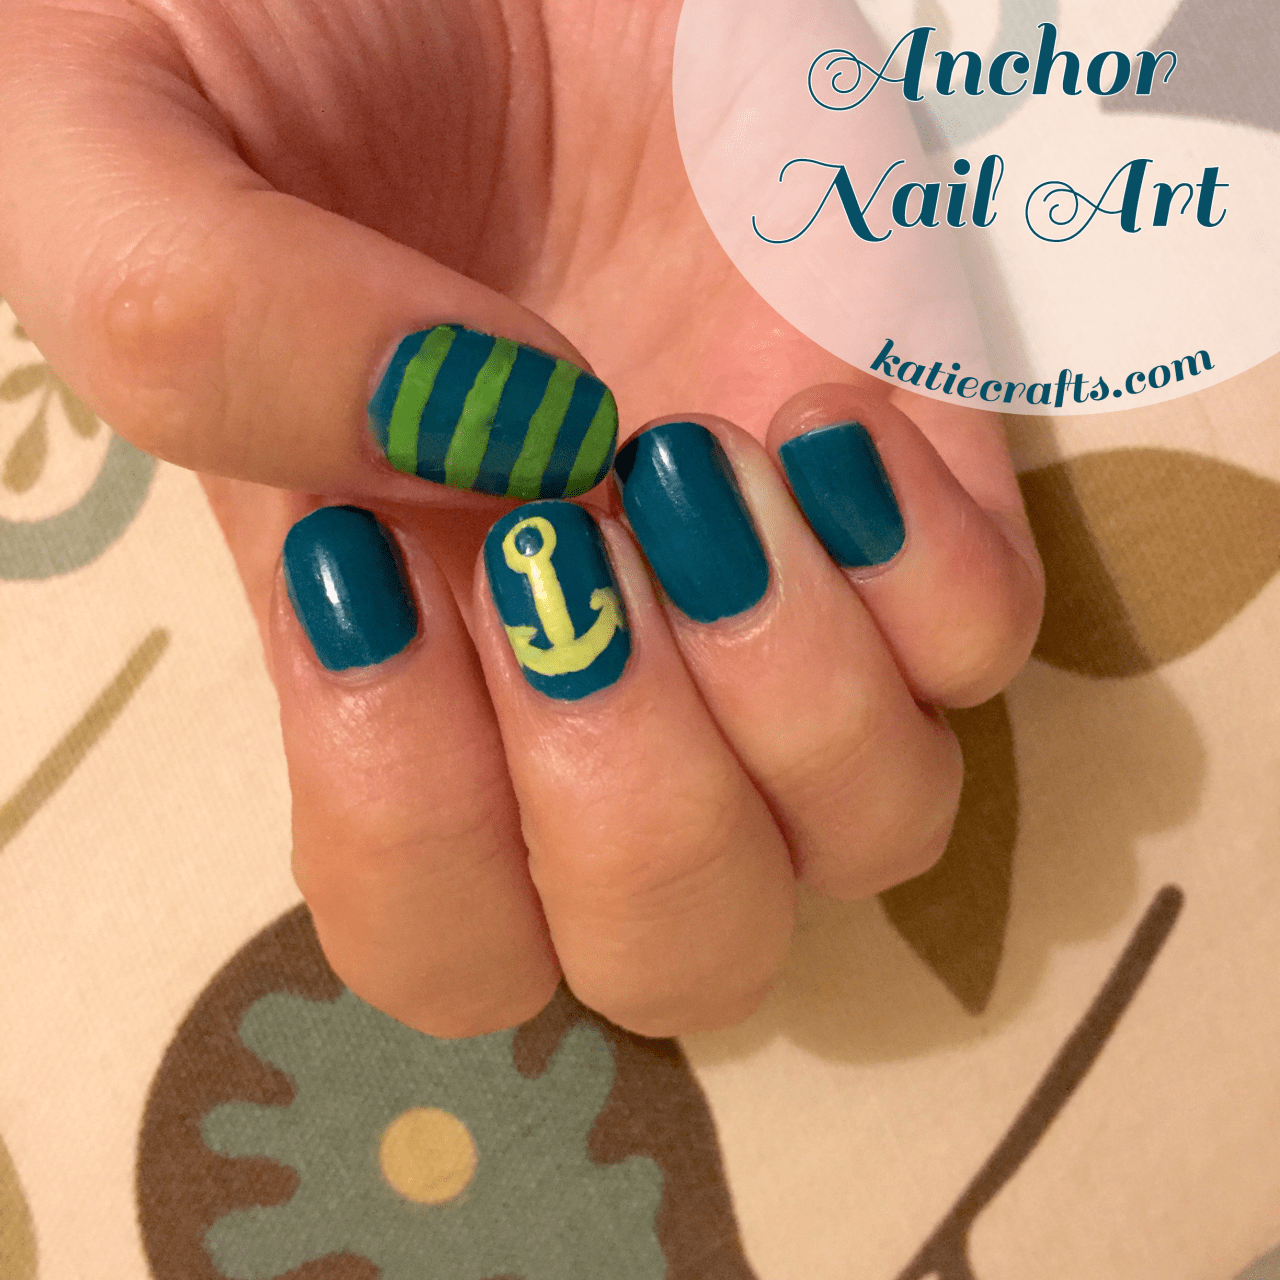 Anchors Nail Art Design by Katie Crafts; https://www.katiecrafts.com